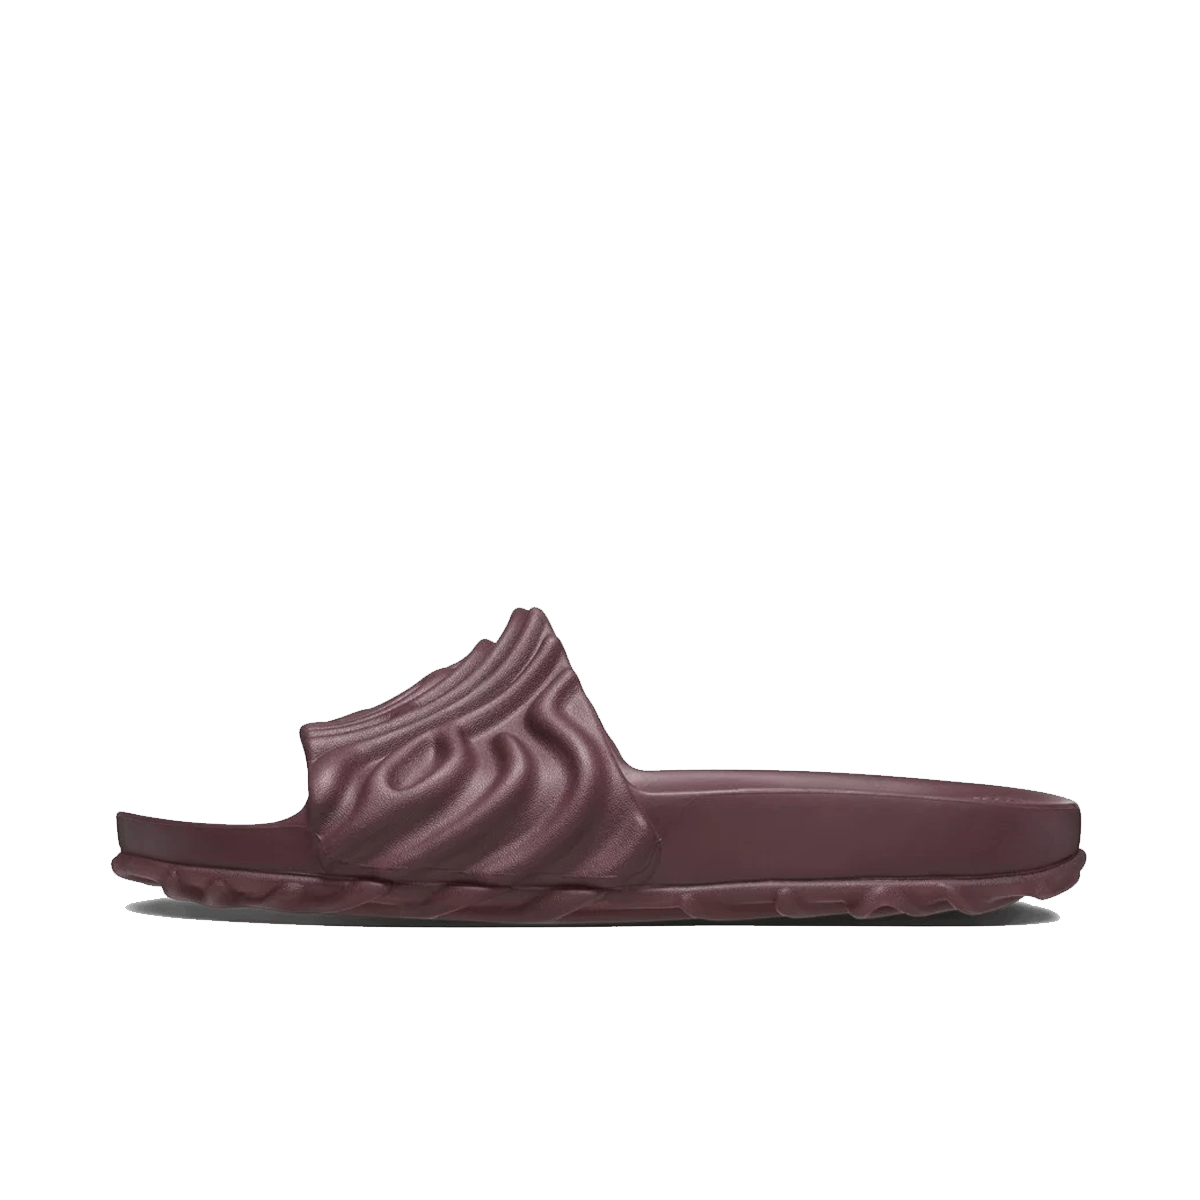 Salehe Bembury x Crocs Pollex Slide 'Huckle' 208685-6WO